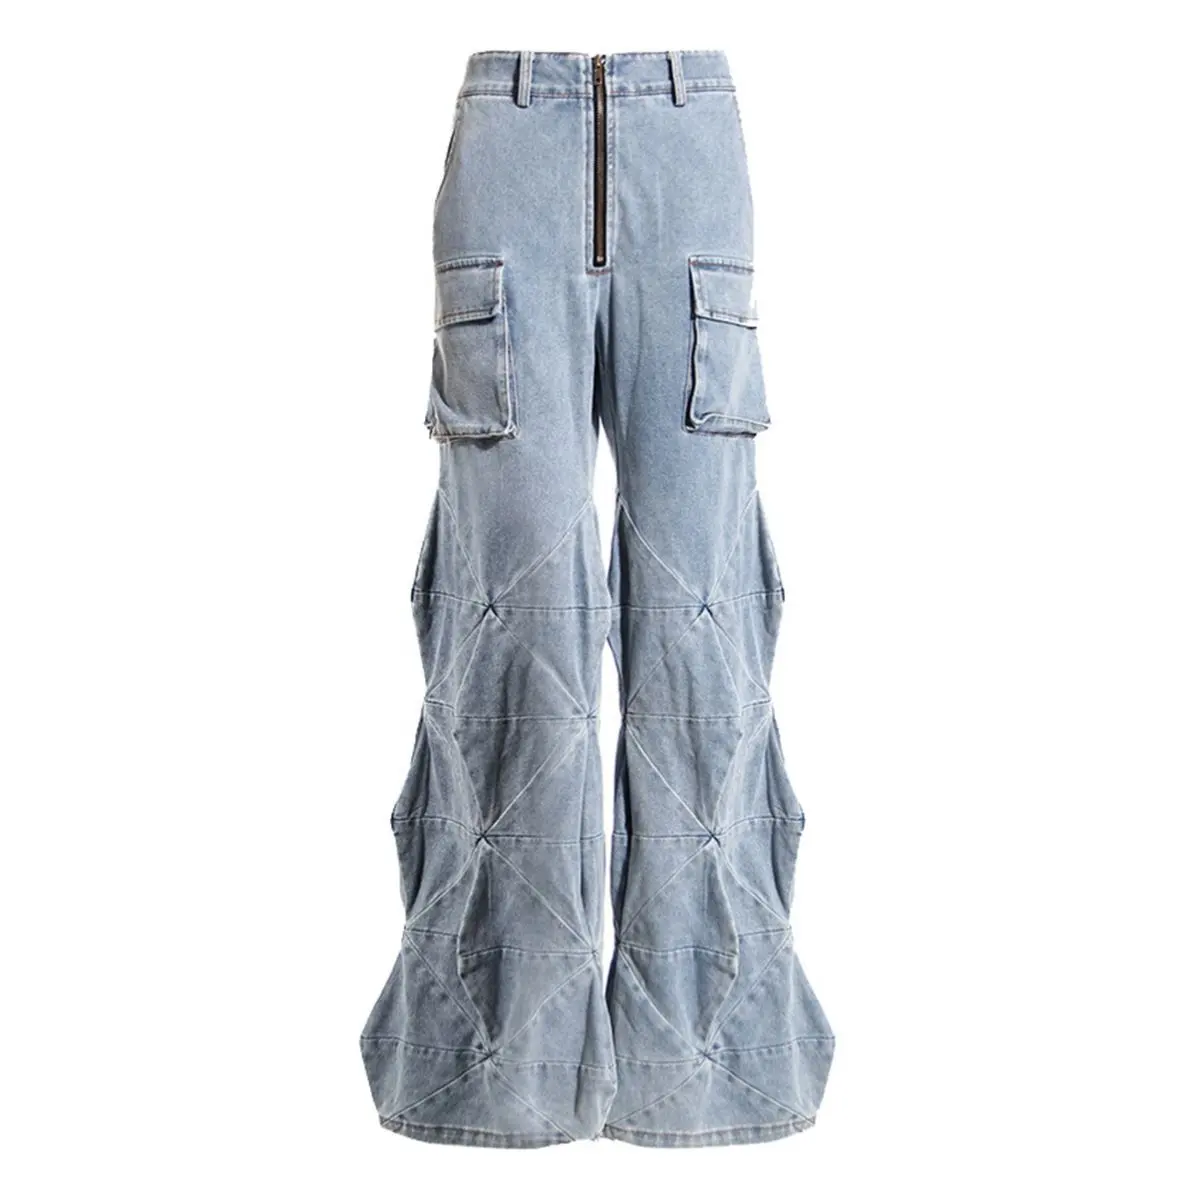 S-XXL Women Denim Jeans Many Pockets Casual Pants Cargo Pants High Quality